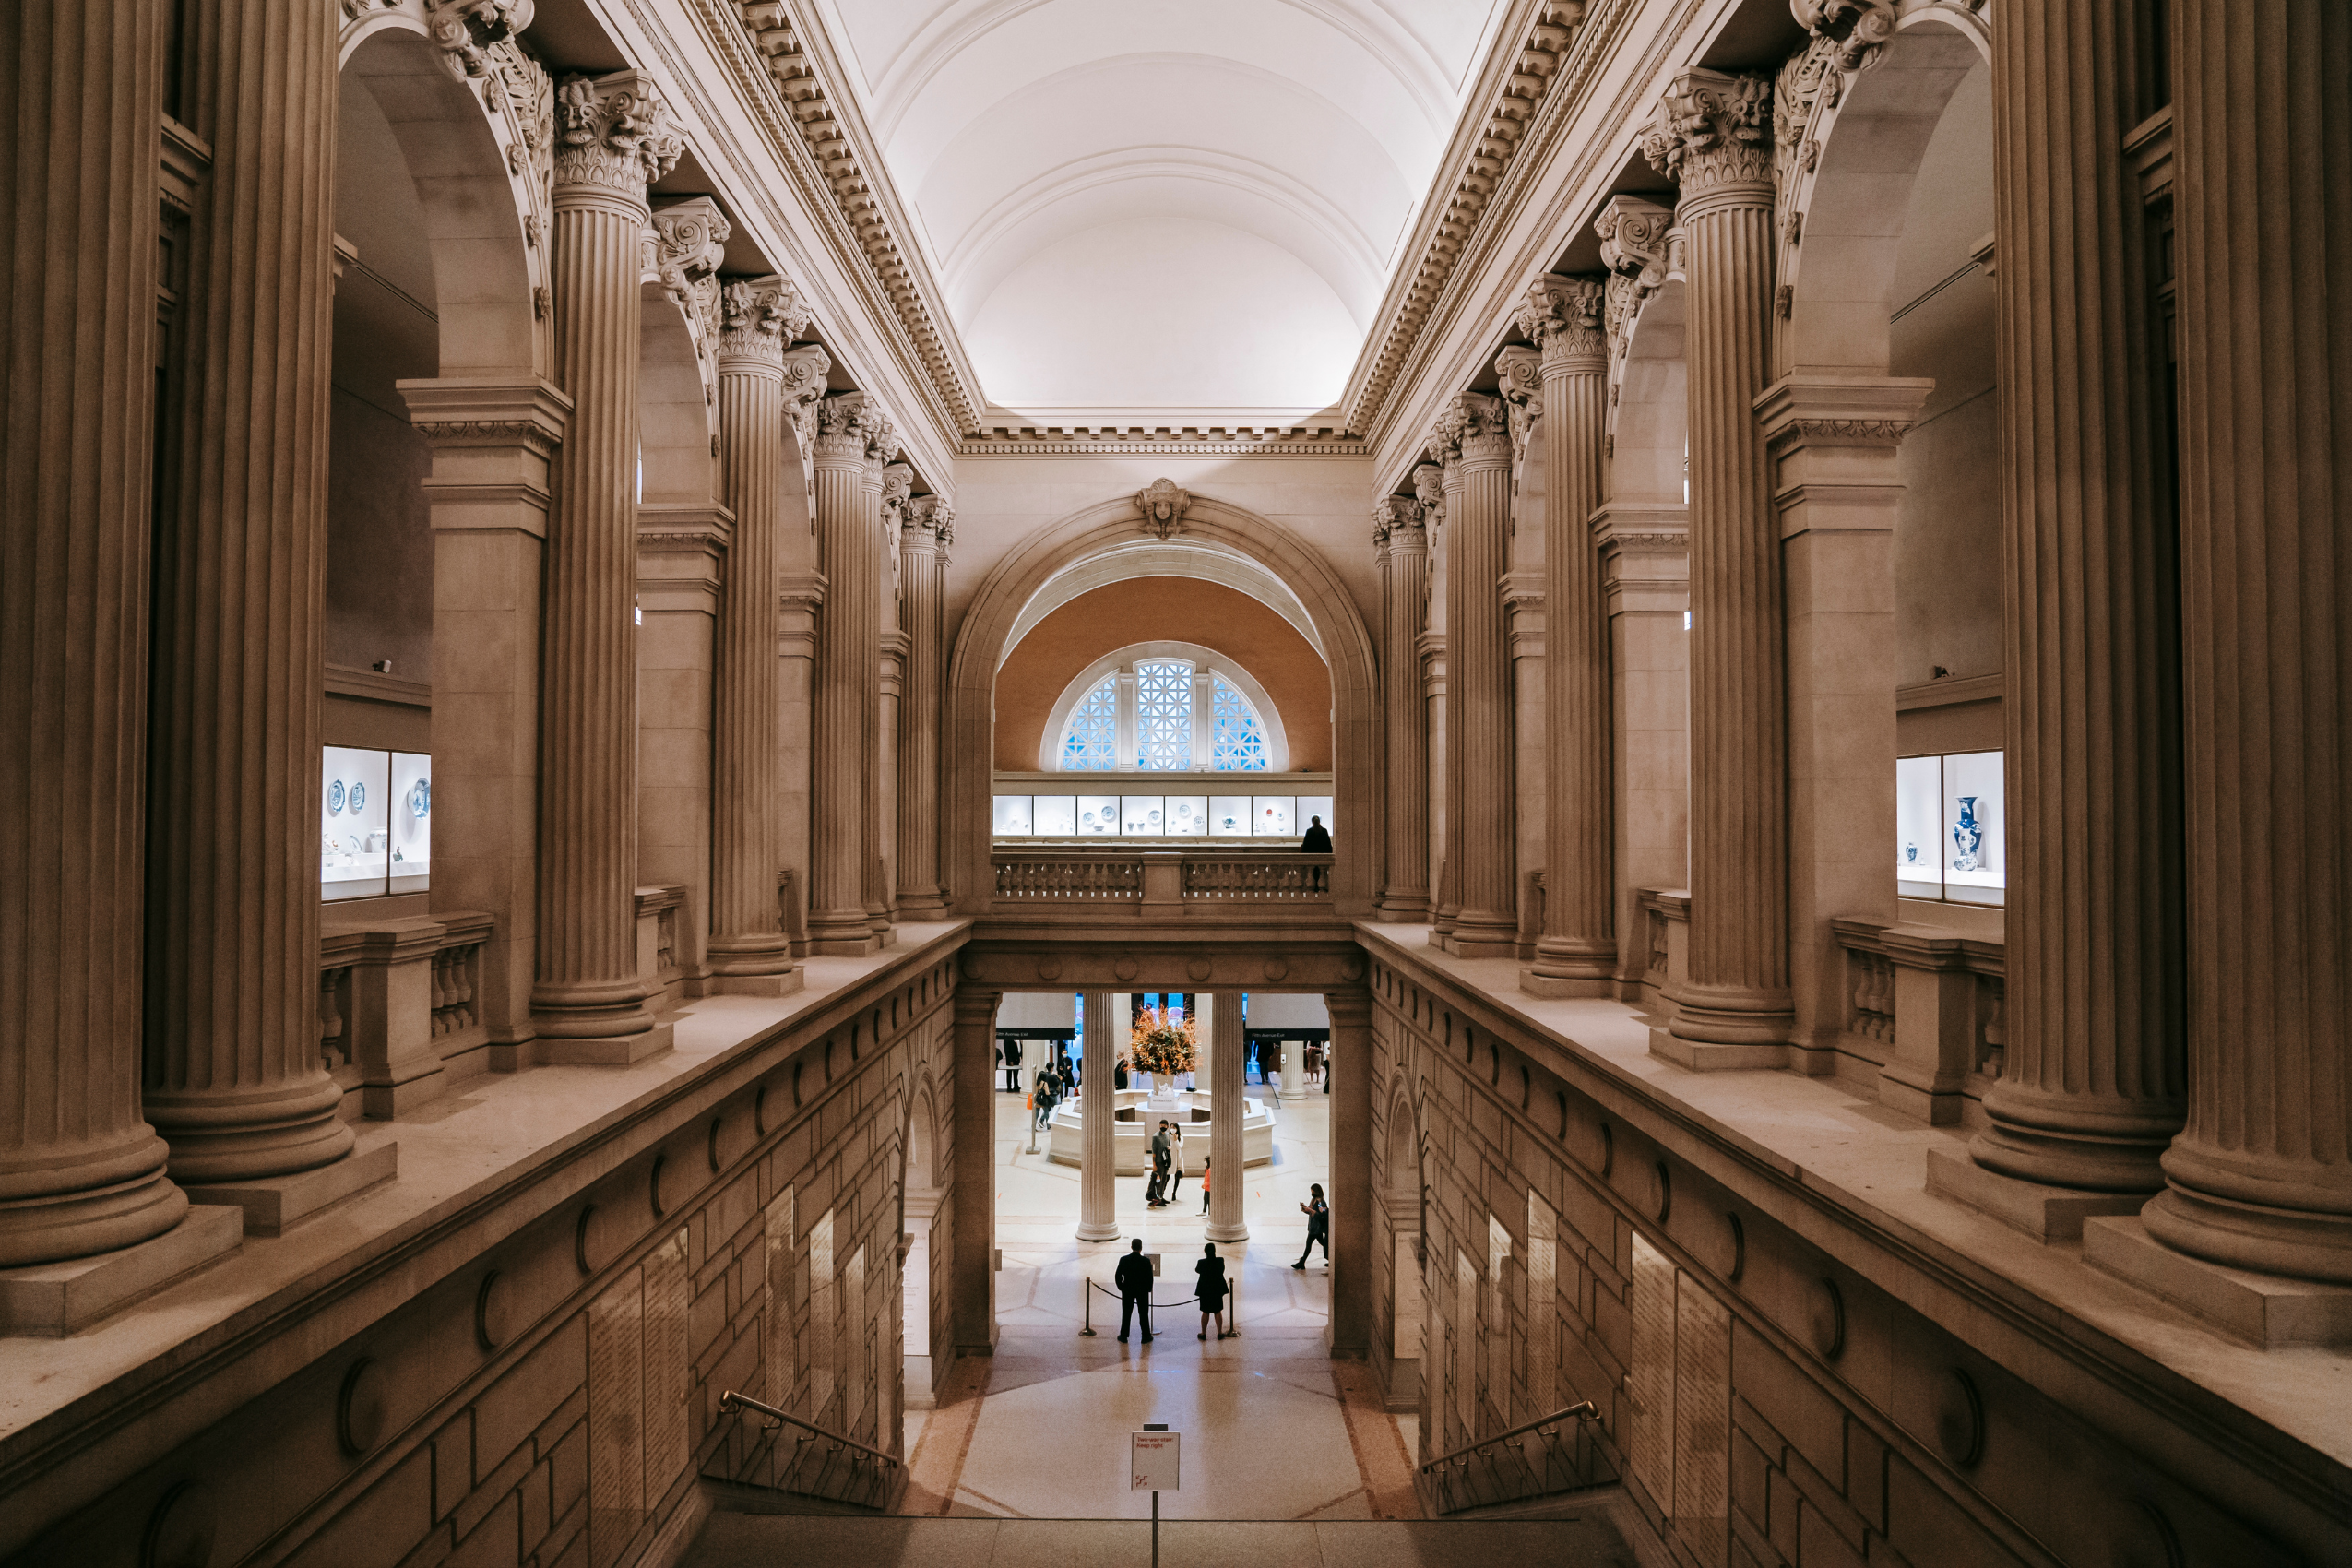 Inside view of the Metropolitan Museum of Art in NYC